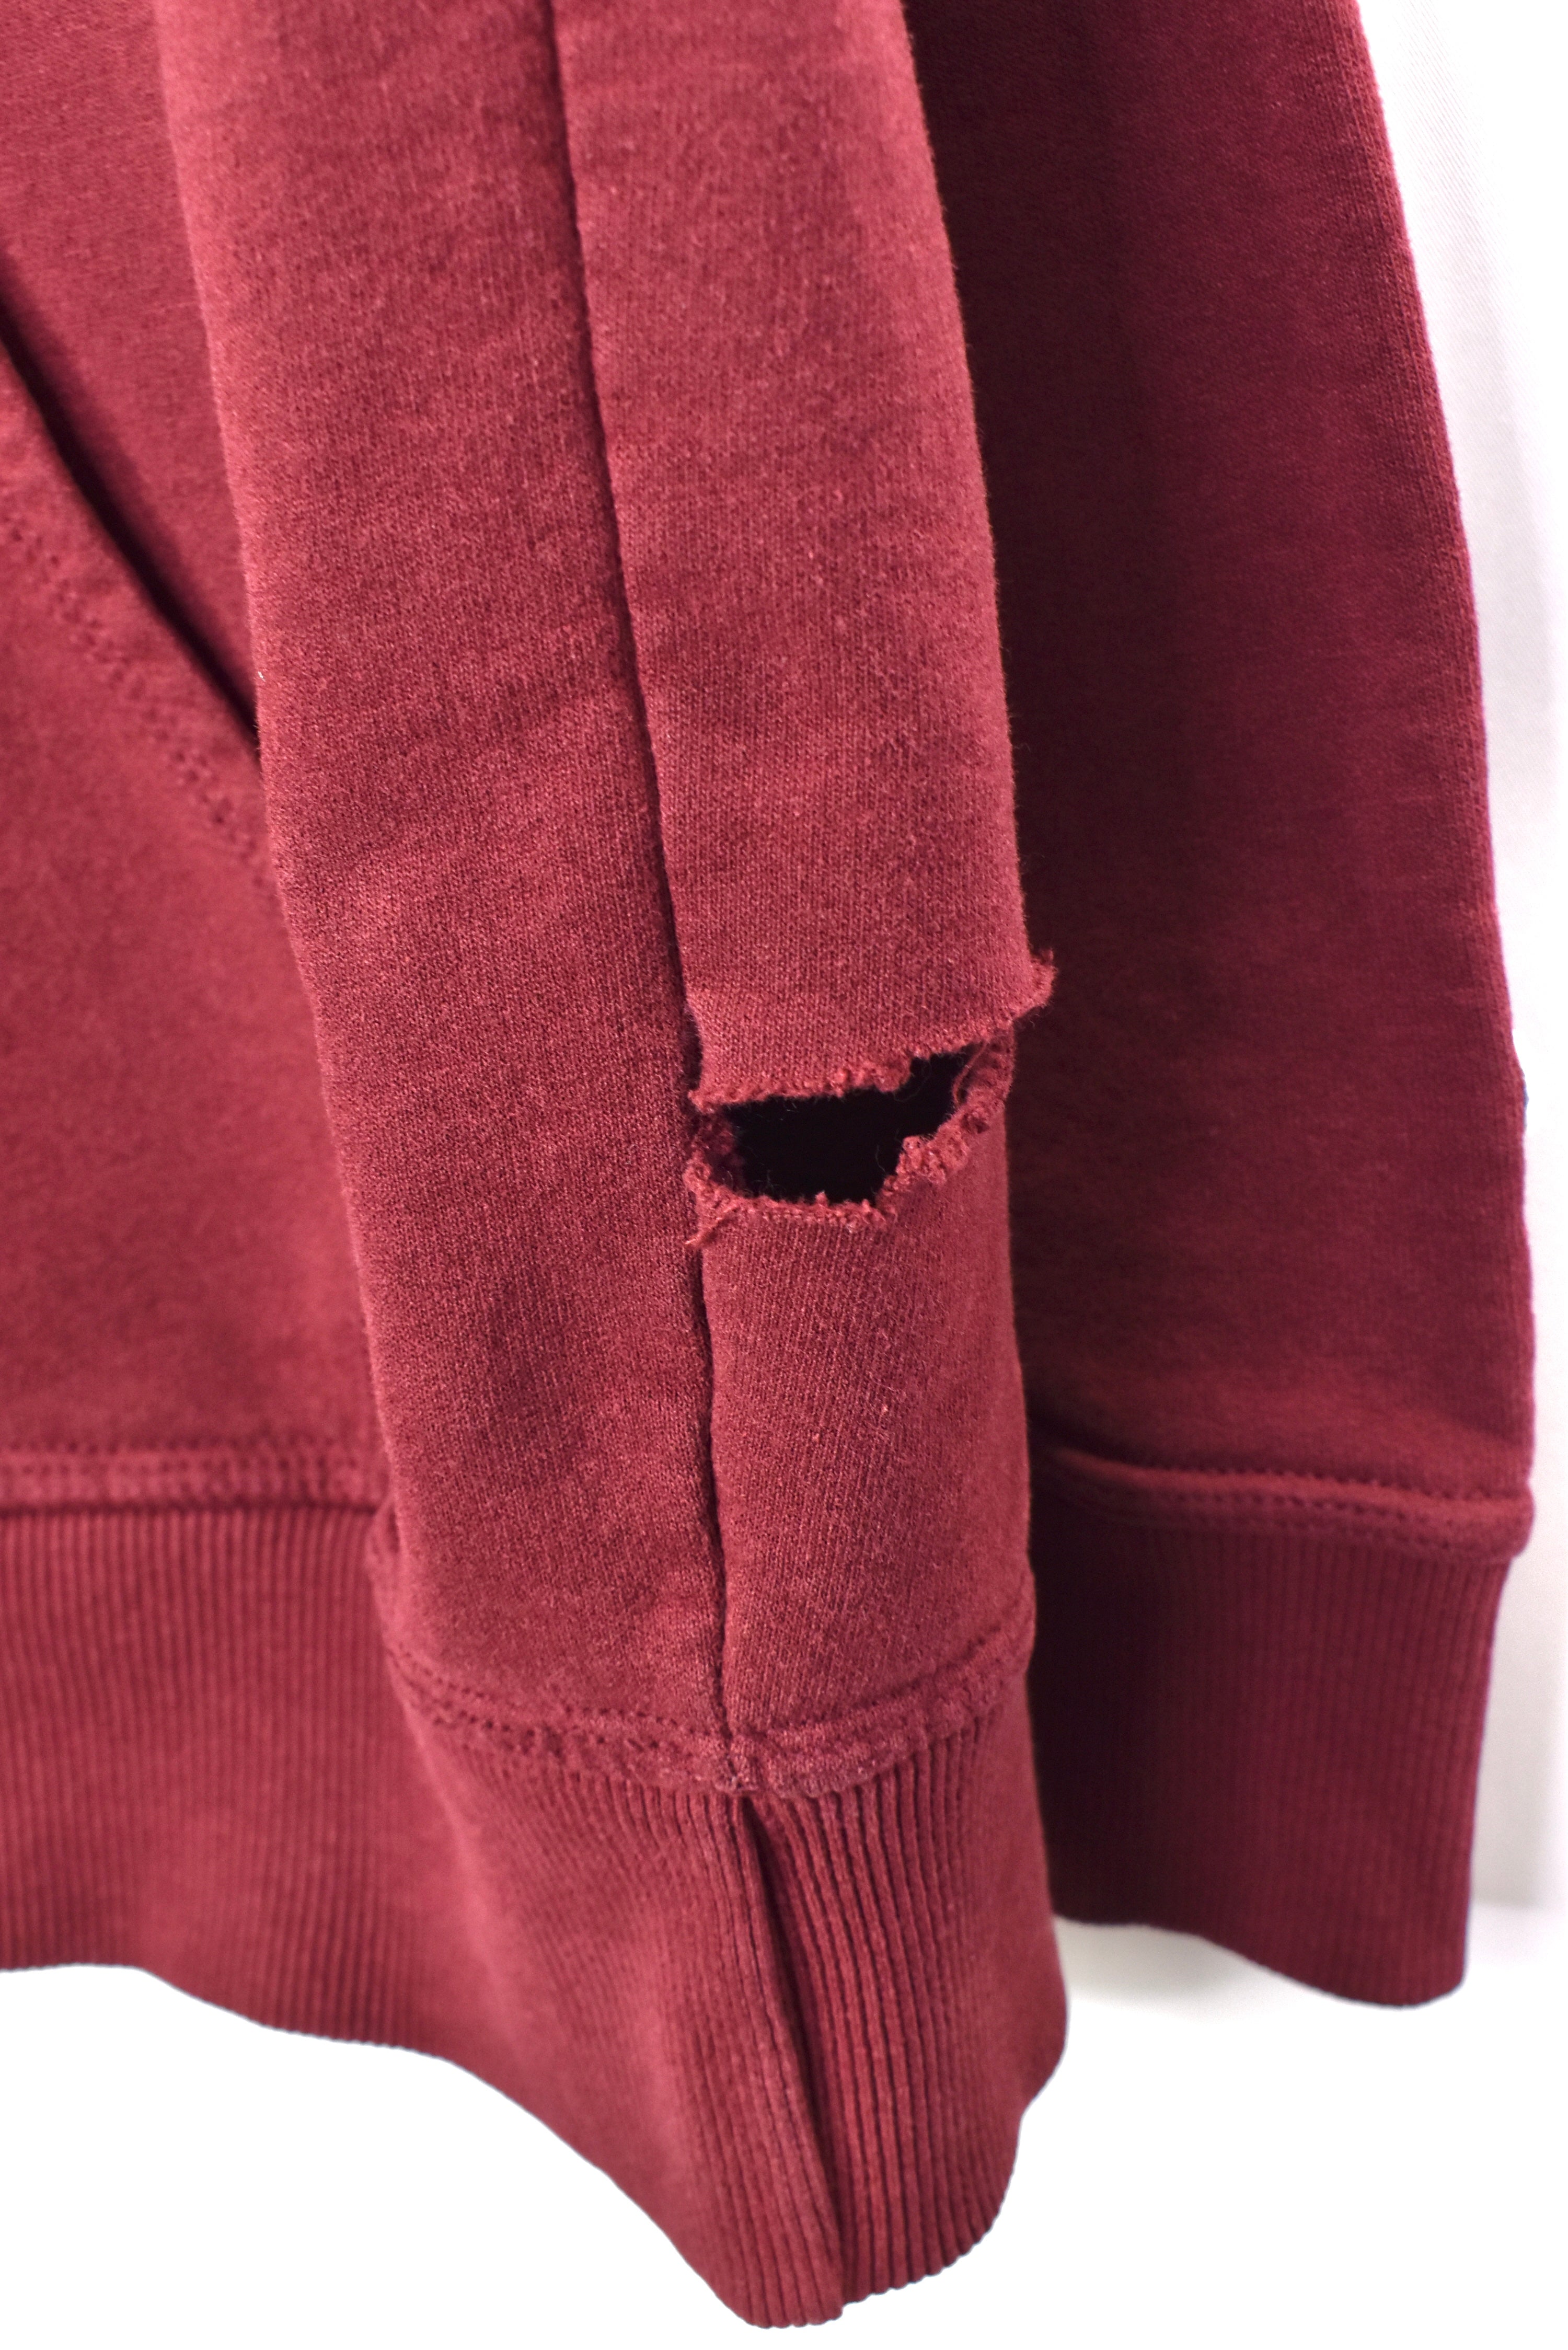 Vintage Champion embroidered burgundy hoodie | Large CHAMPION